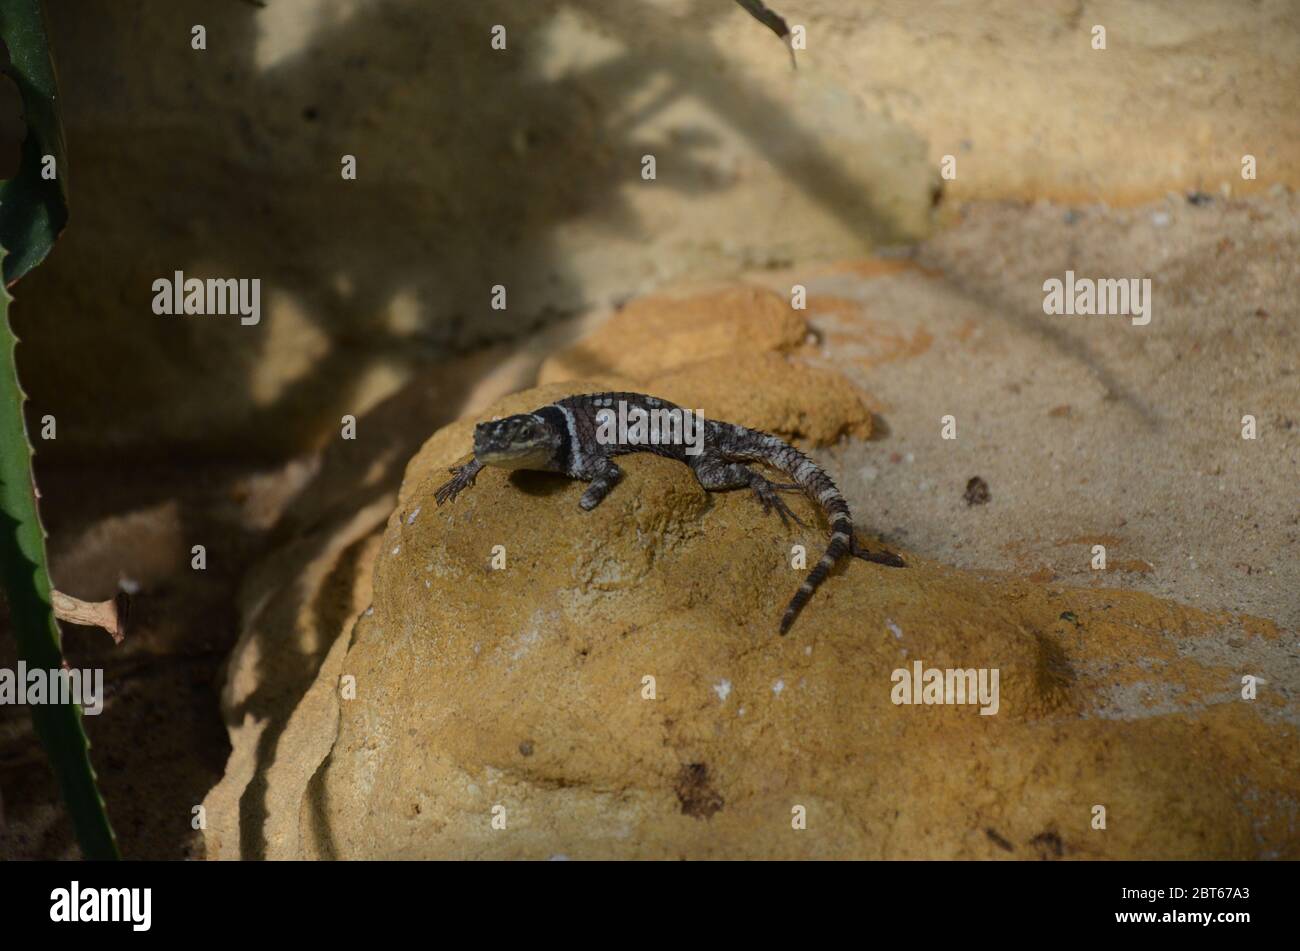 Sagebrush lizard on the rock Stock Photo